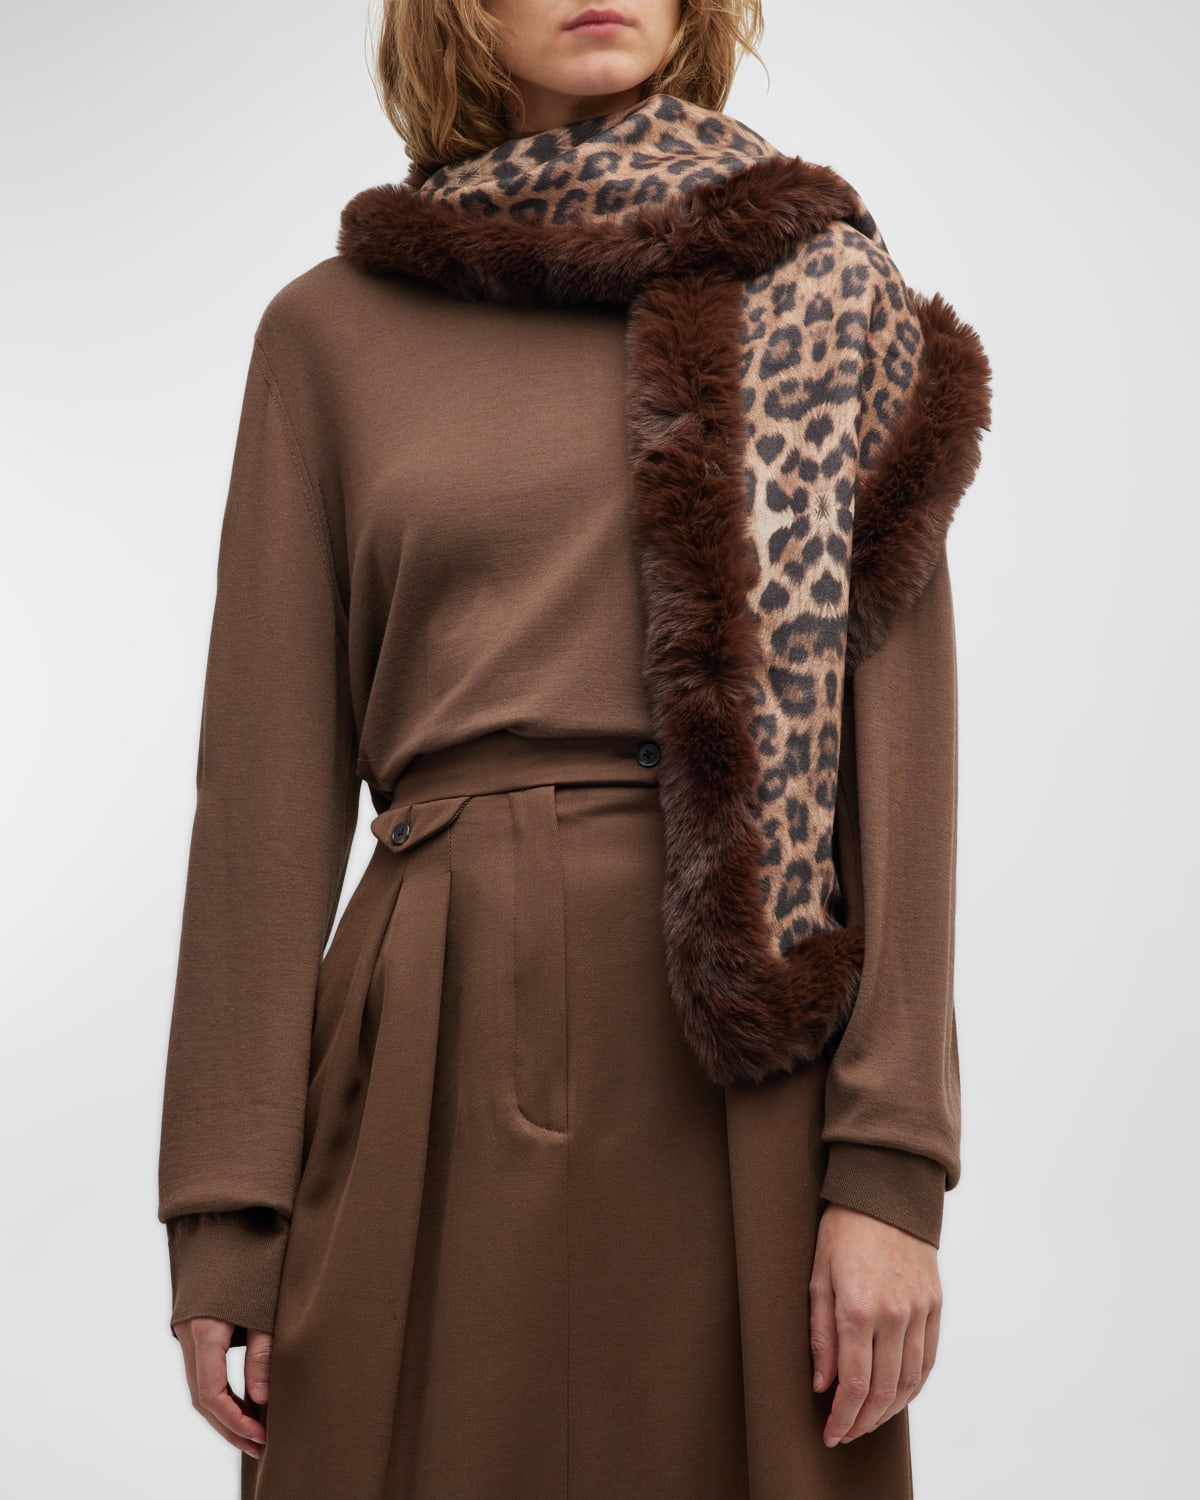 Adrienne Landau Studio Rex Rabbit Fur Leopard Print Scarf - A.J.